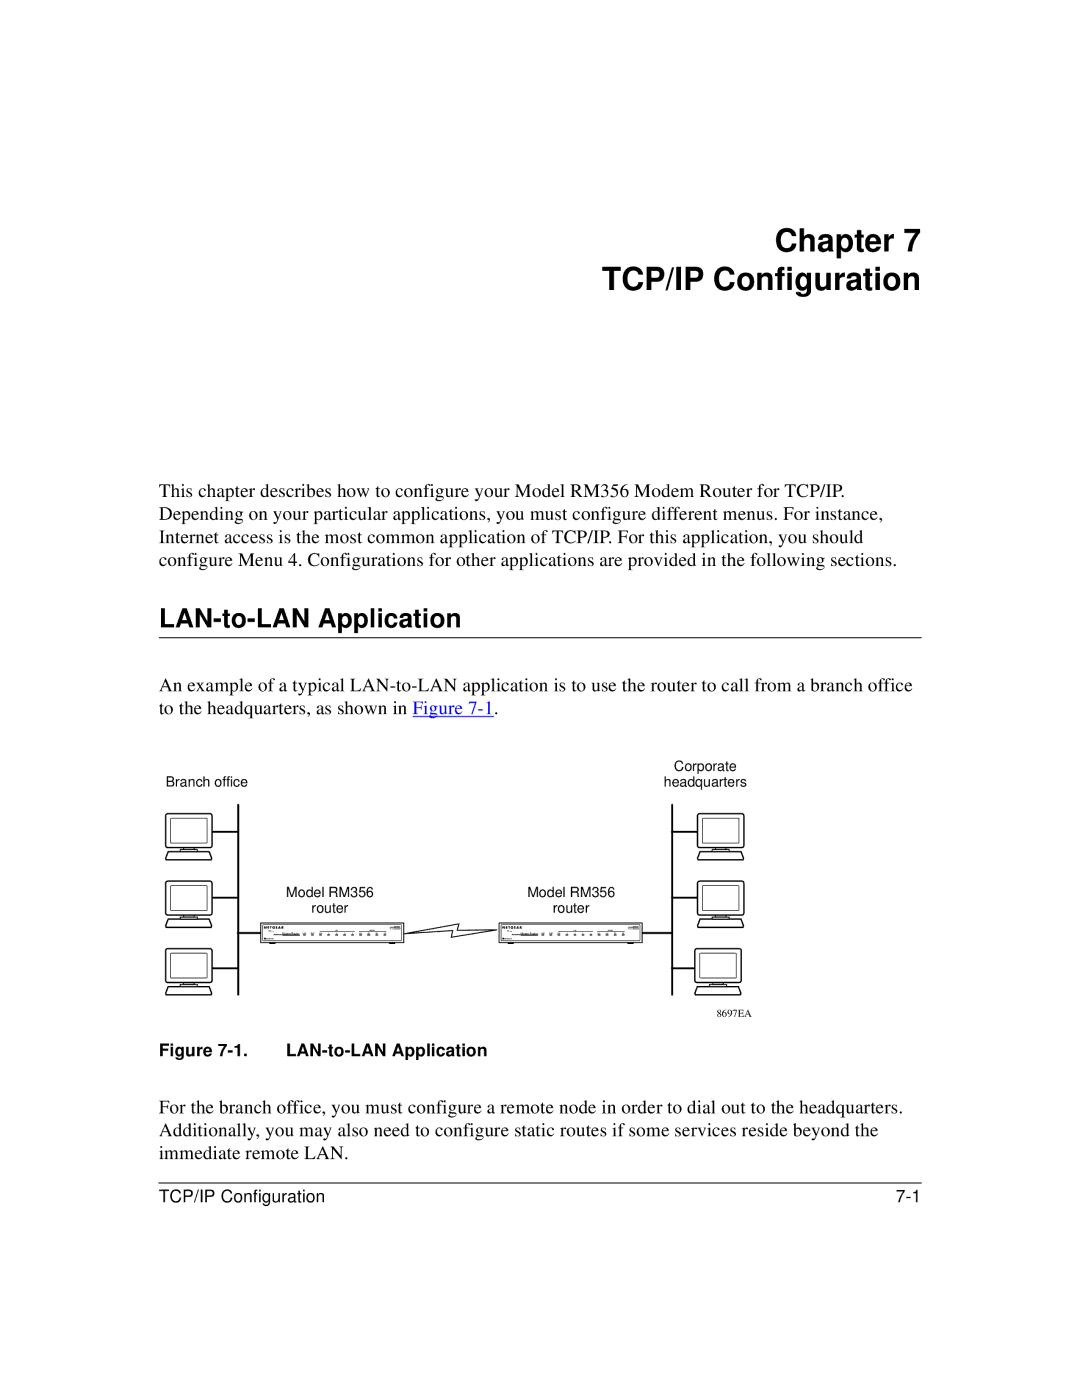 Bay Technical Associates RM356 manual Chapter TCP/IP Configuration, LAN-to-LAN Application 